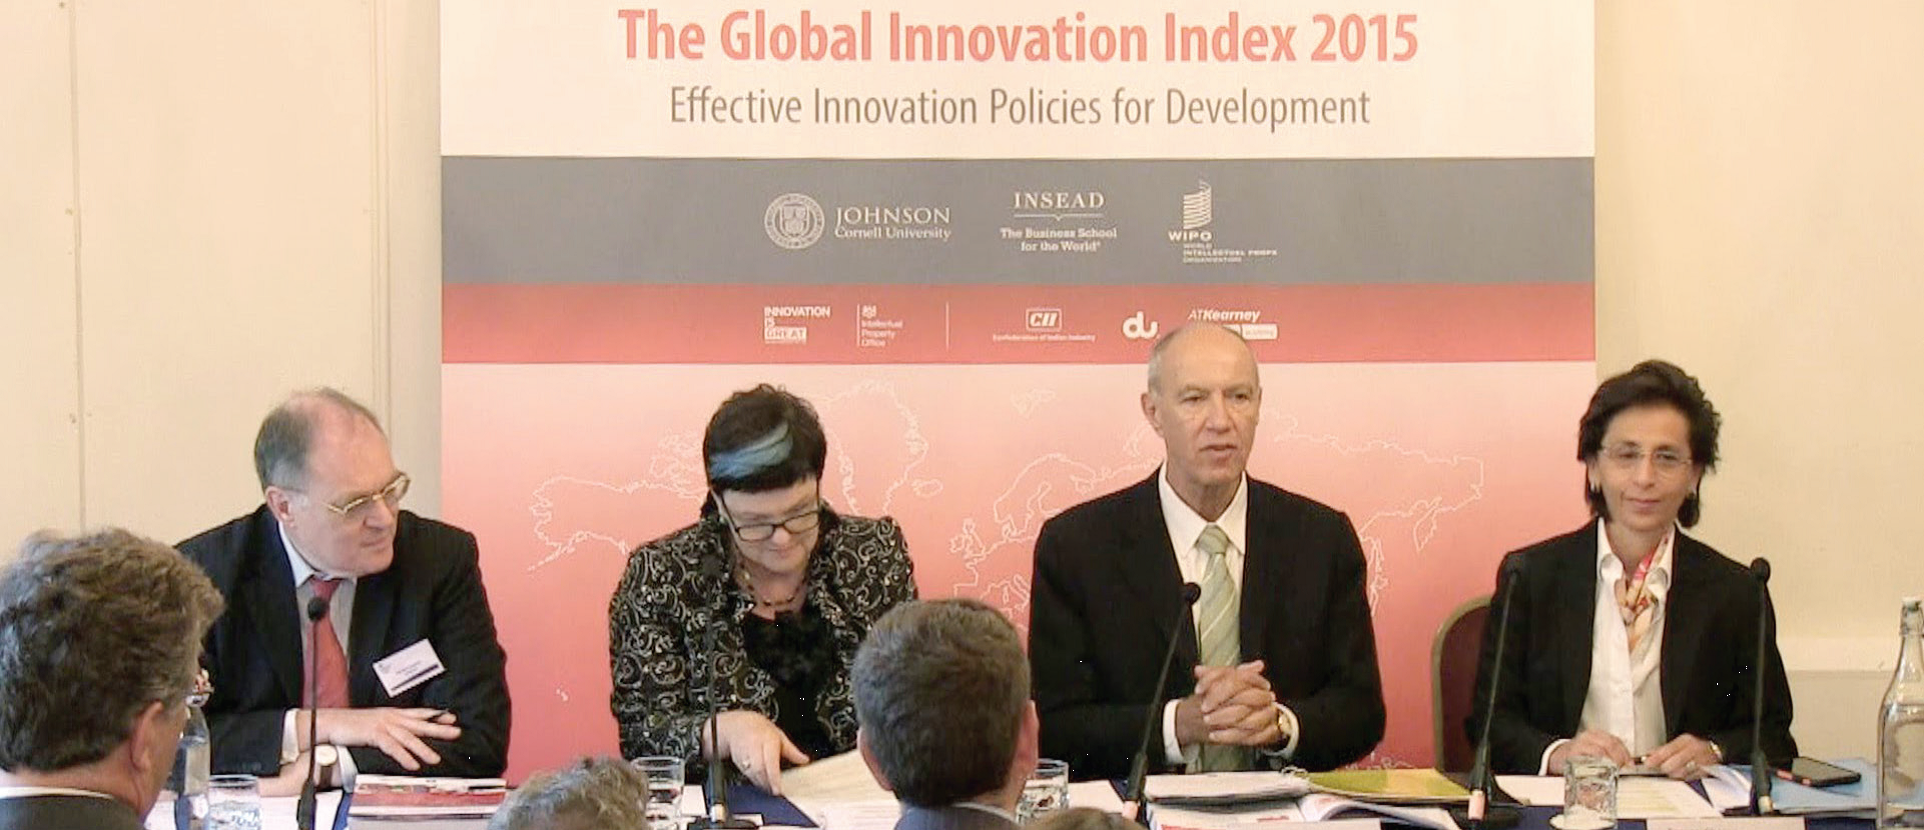 Họp báo công bố Global Innovation Index 2015. Ảnh: globalinnovationindex.org